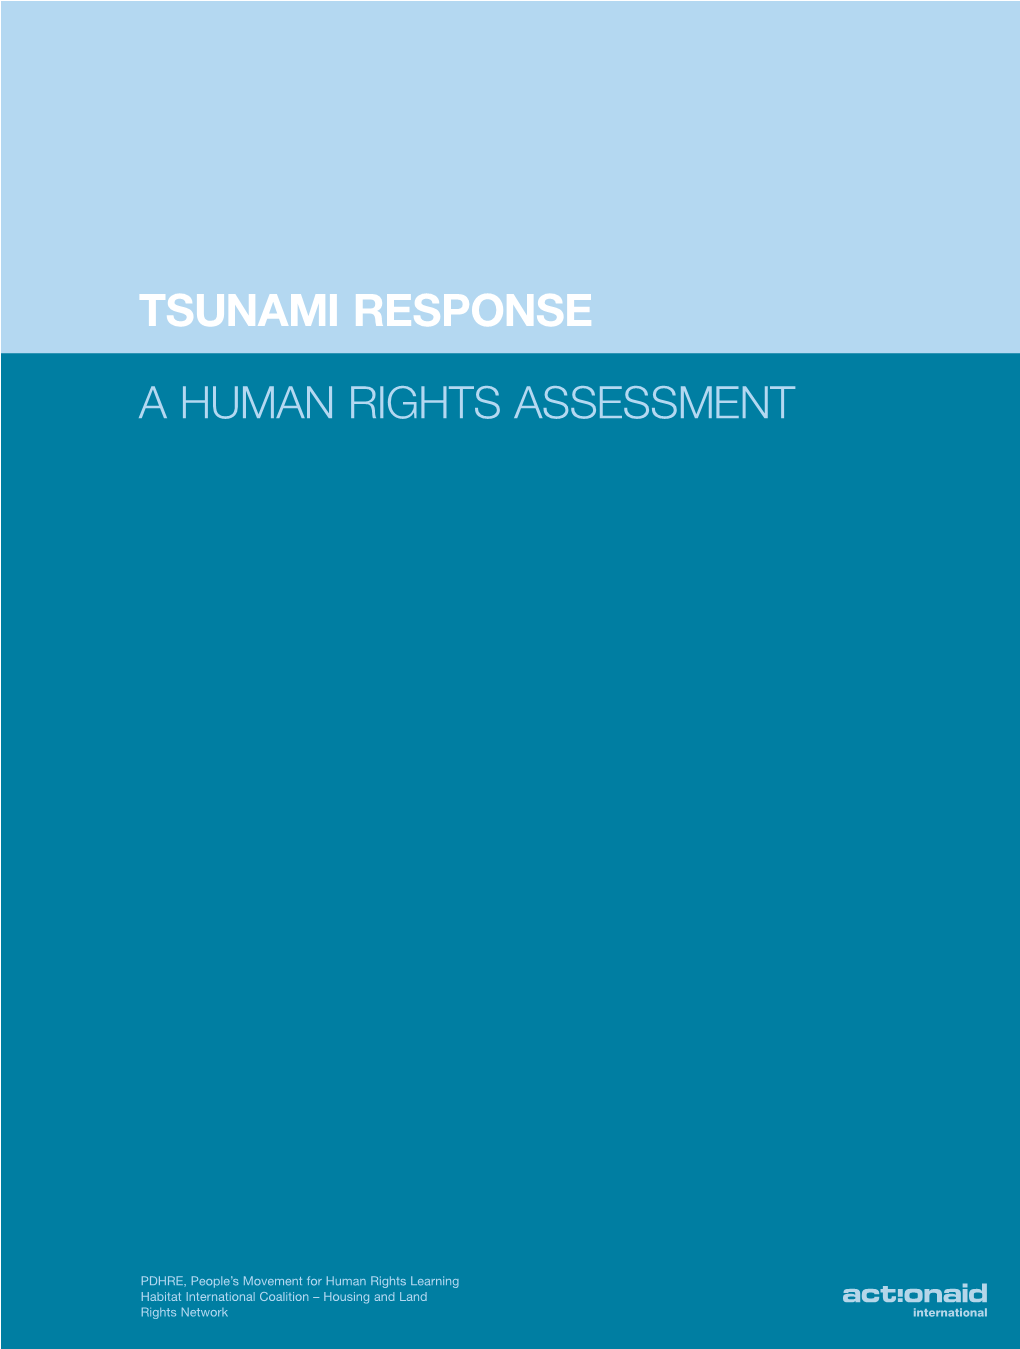 Tsunami Response, a Human Rights Assessment